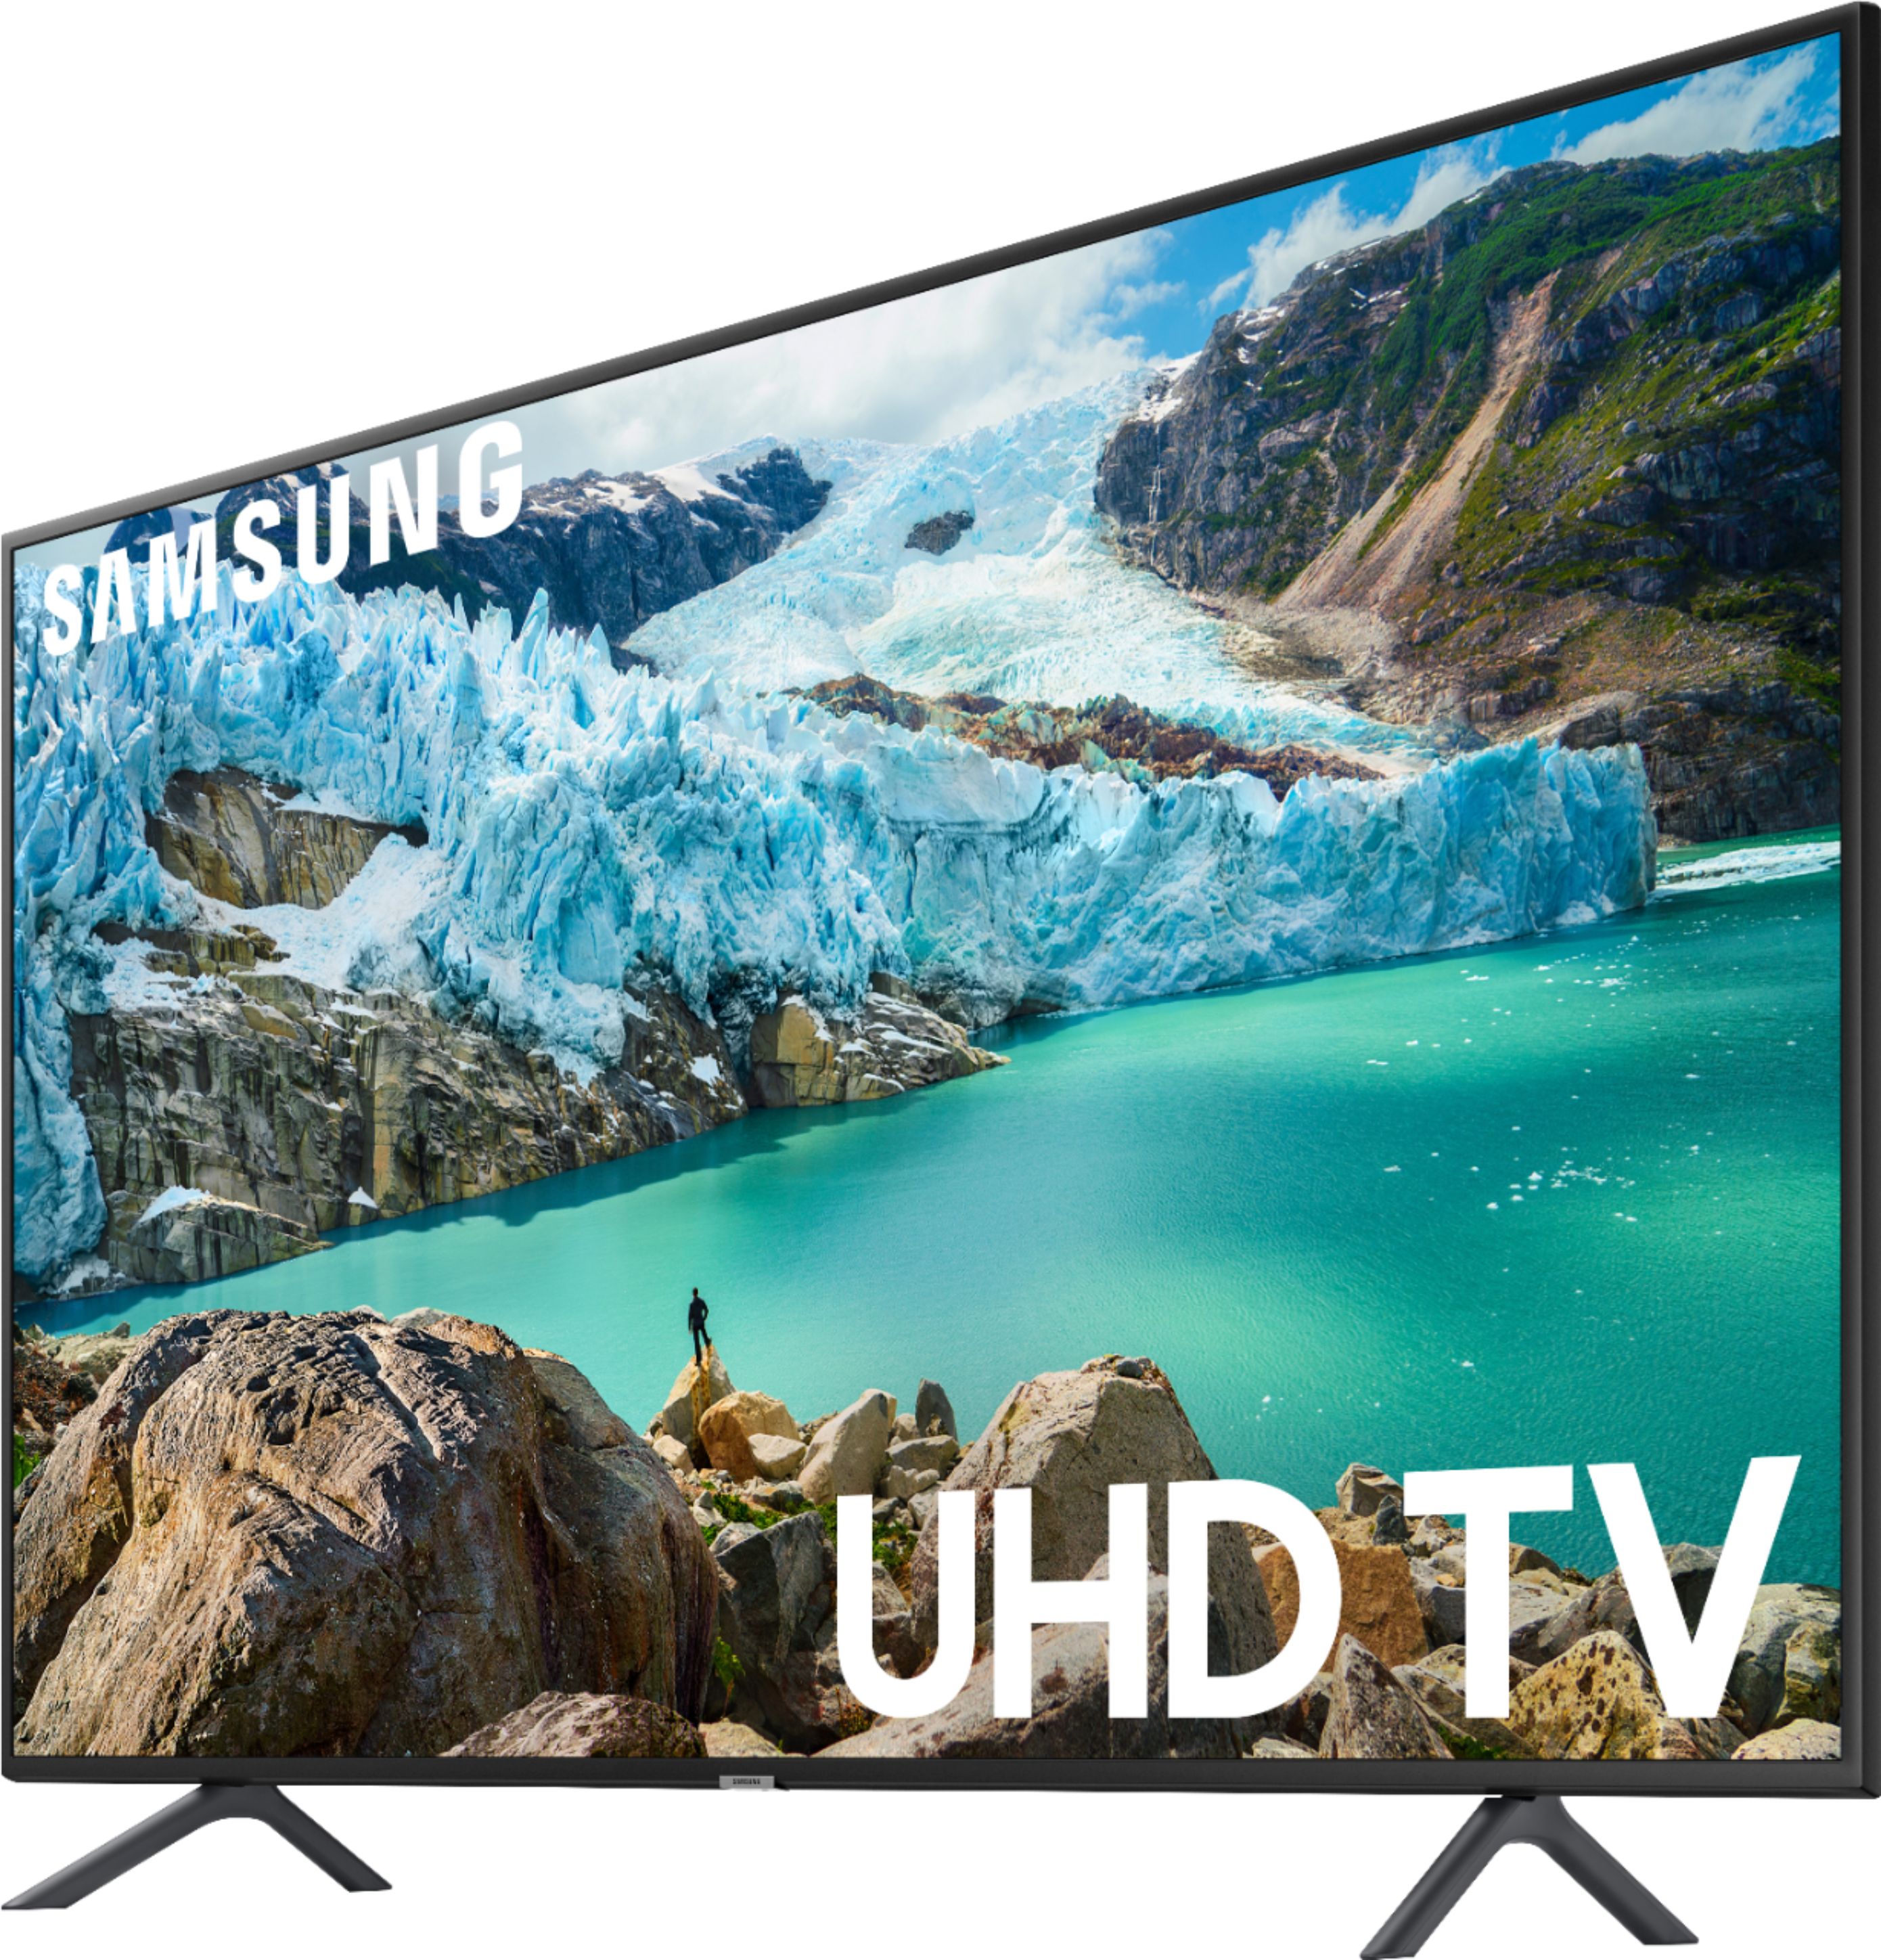 Buy: Class 7 Series 2160p Smart 4K UHD TV with HDR UN43RU7100FXZA